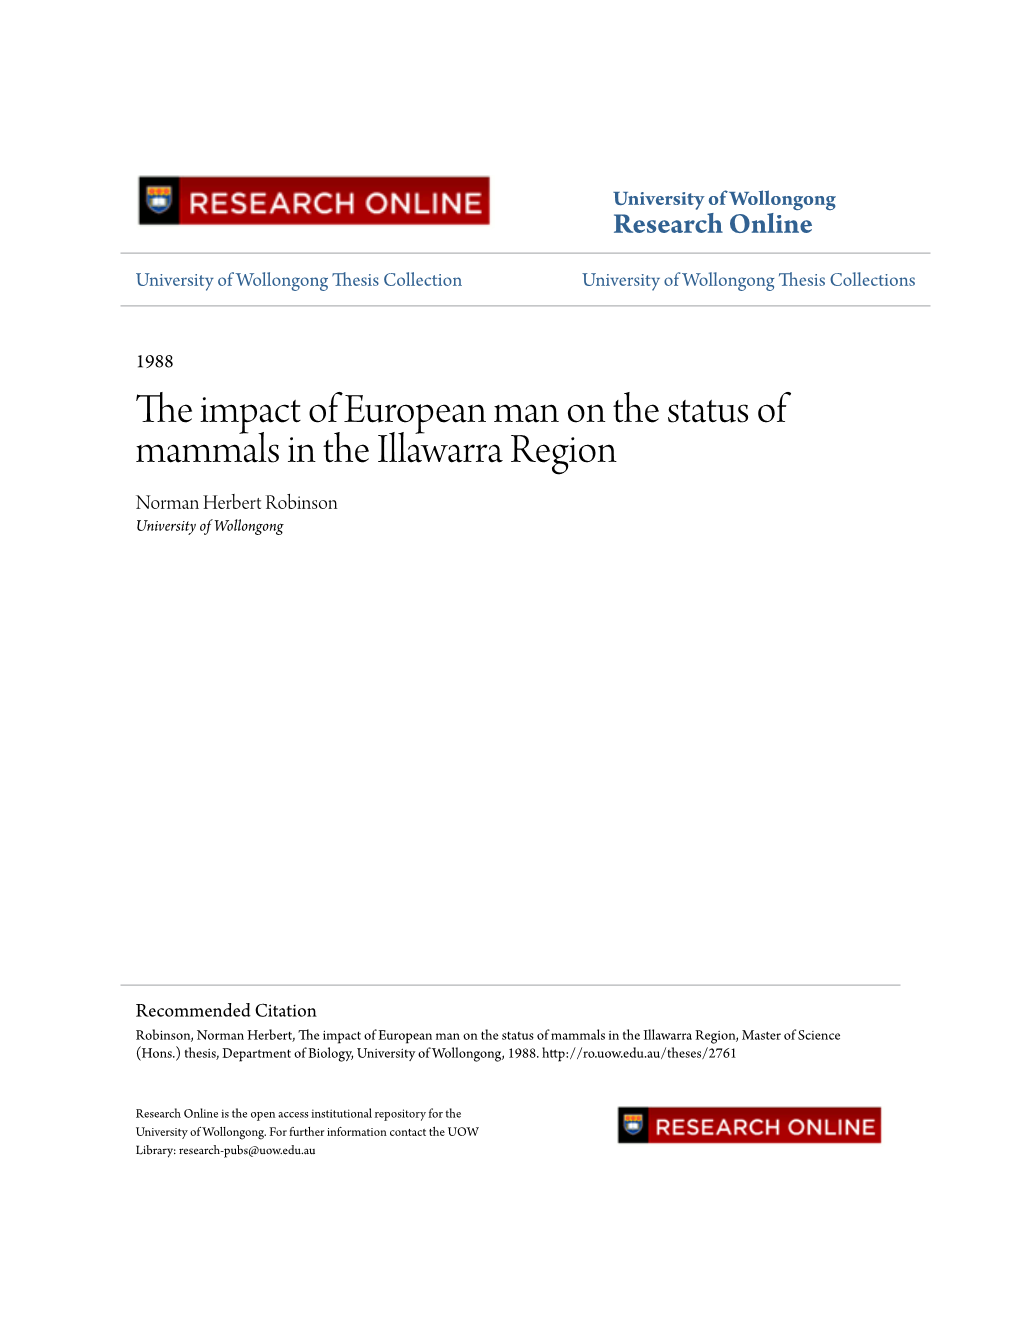 The Impact of European Man on the Status of Mammals in the Illawarra Region Norman Herbert Robinson University of Wollongong